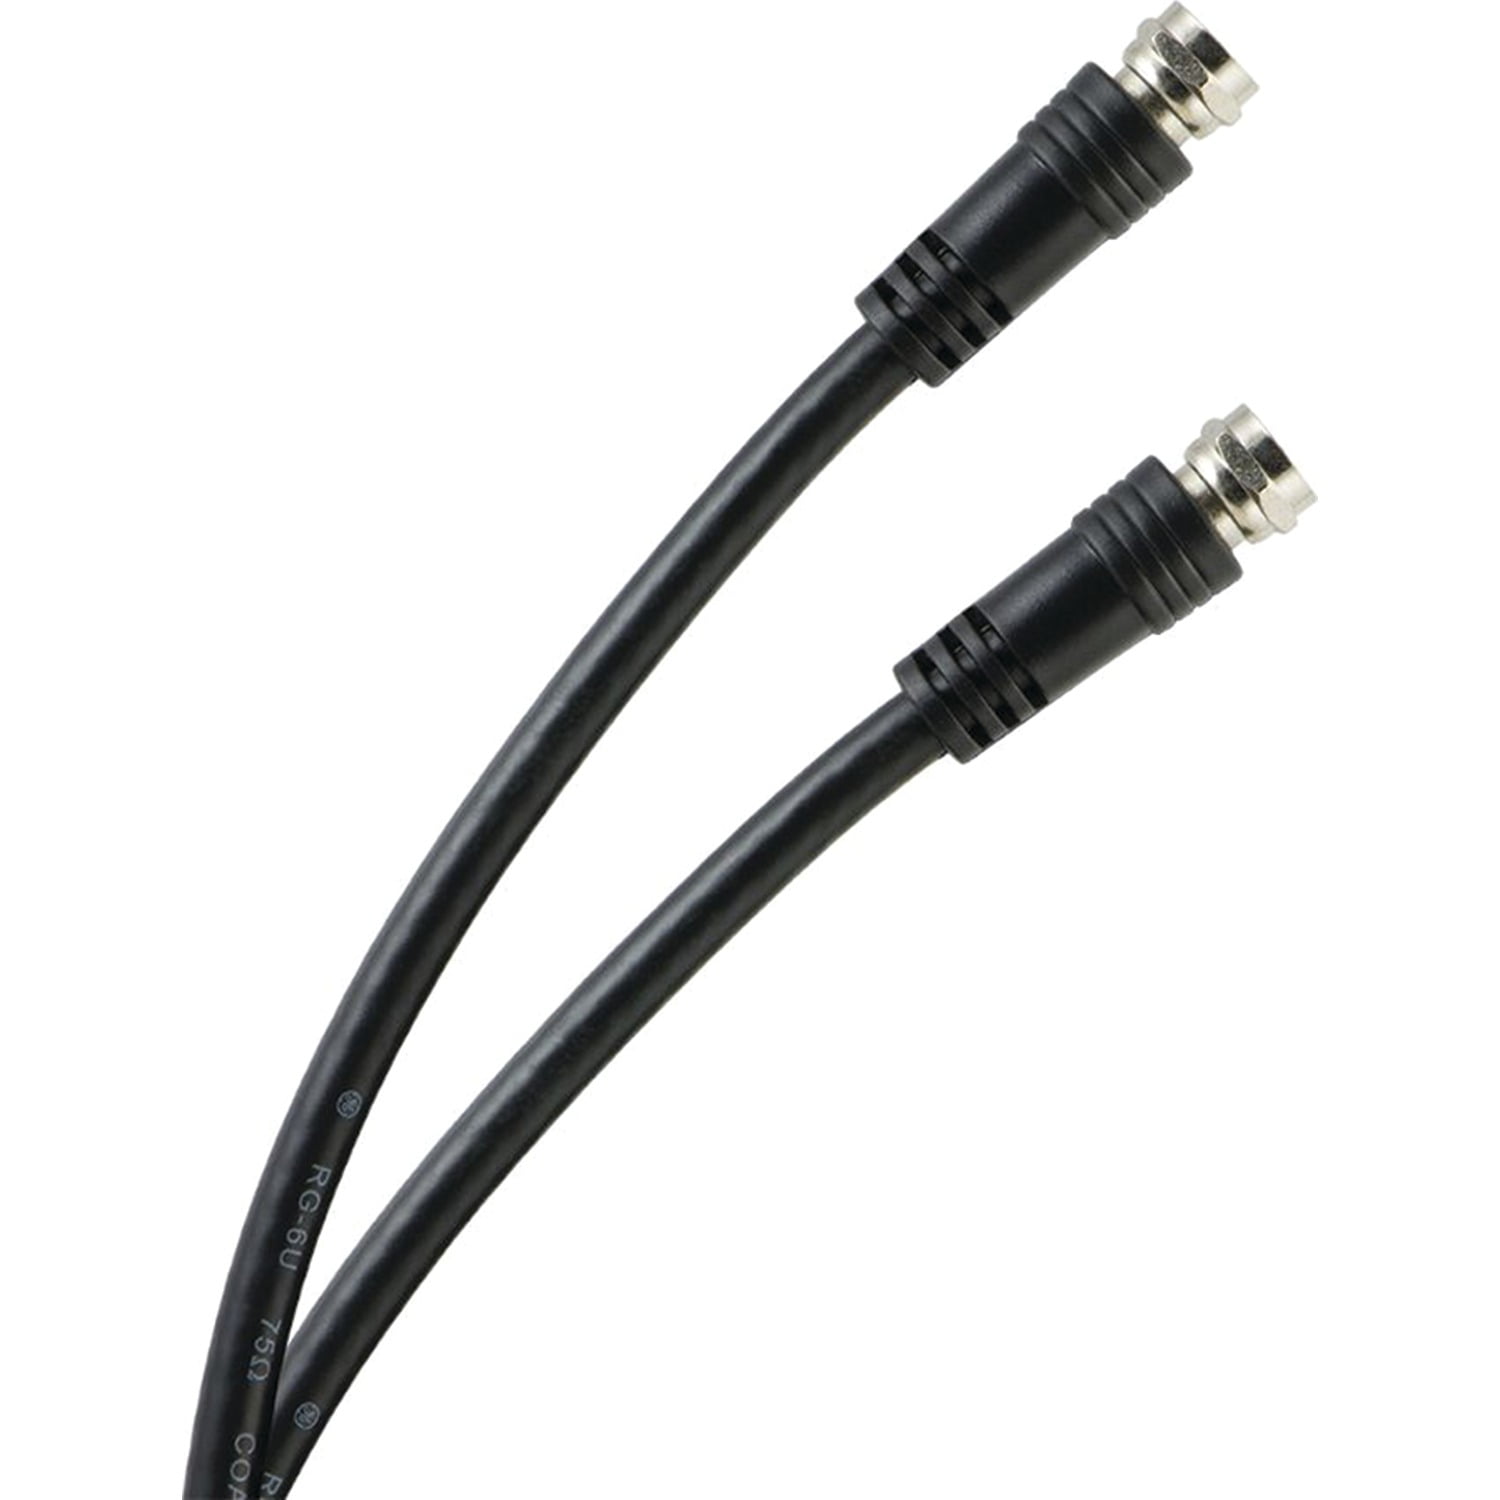 25ft BLACK COAXIAL RG6 CABLE TV VCR DVR INTERNET F CONNECTOR INDOOR OUTDOOR  COAX